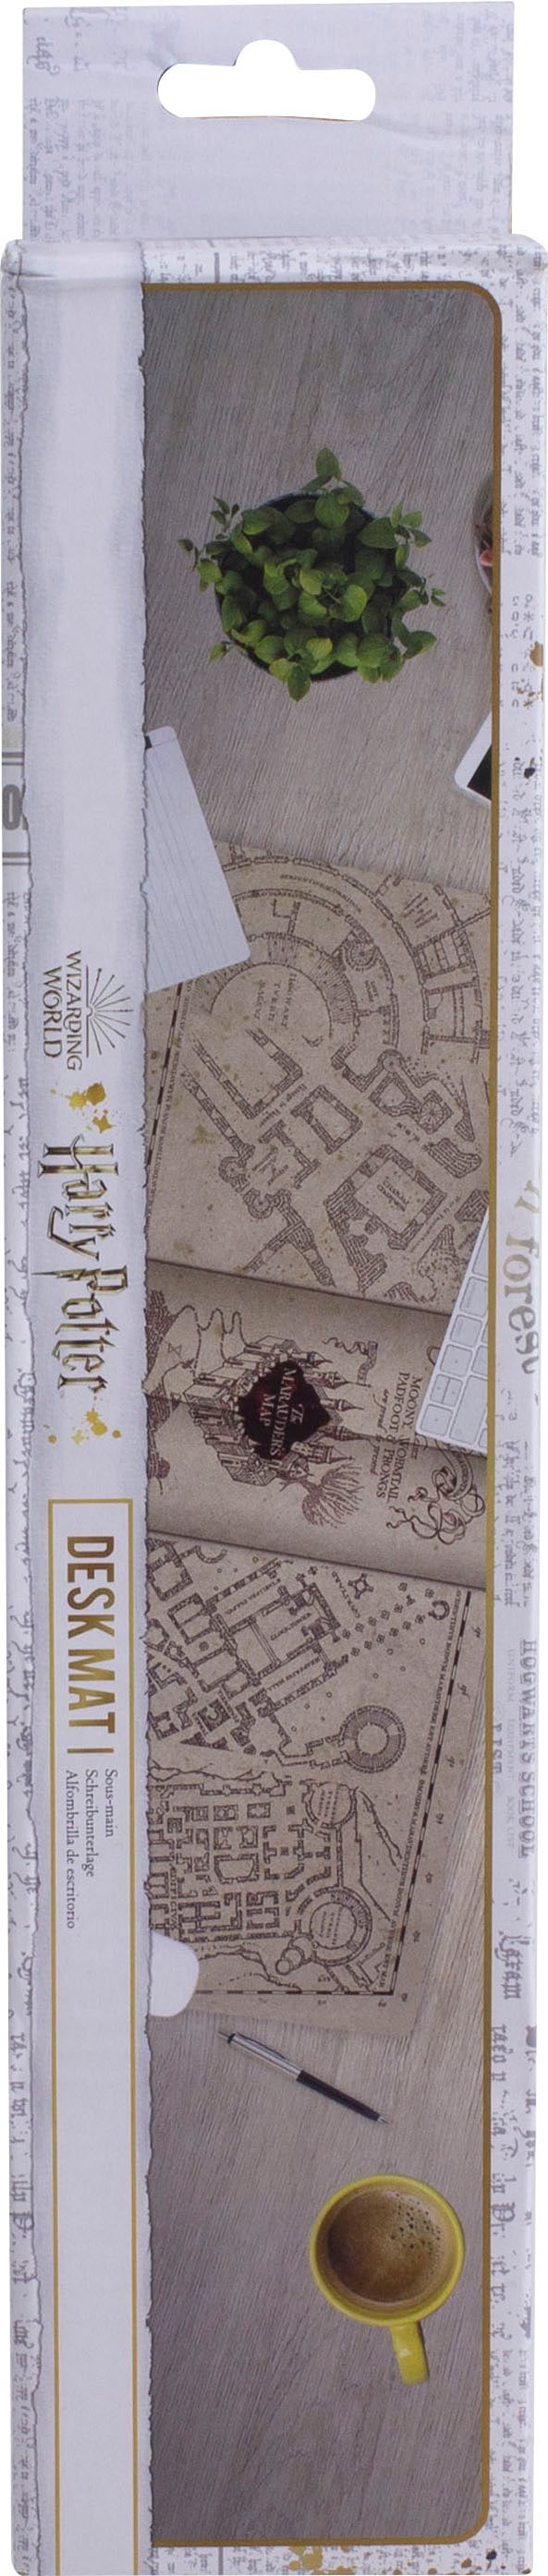 Paladone Mauspad »Harry Potter Karte des Rumtreibers XL Mauspad«